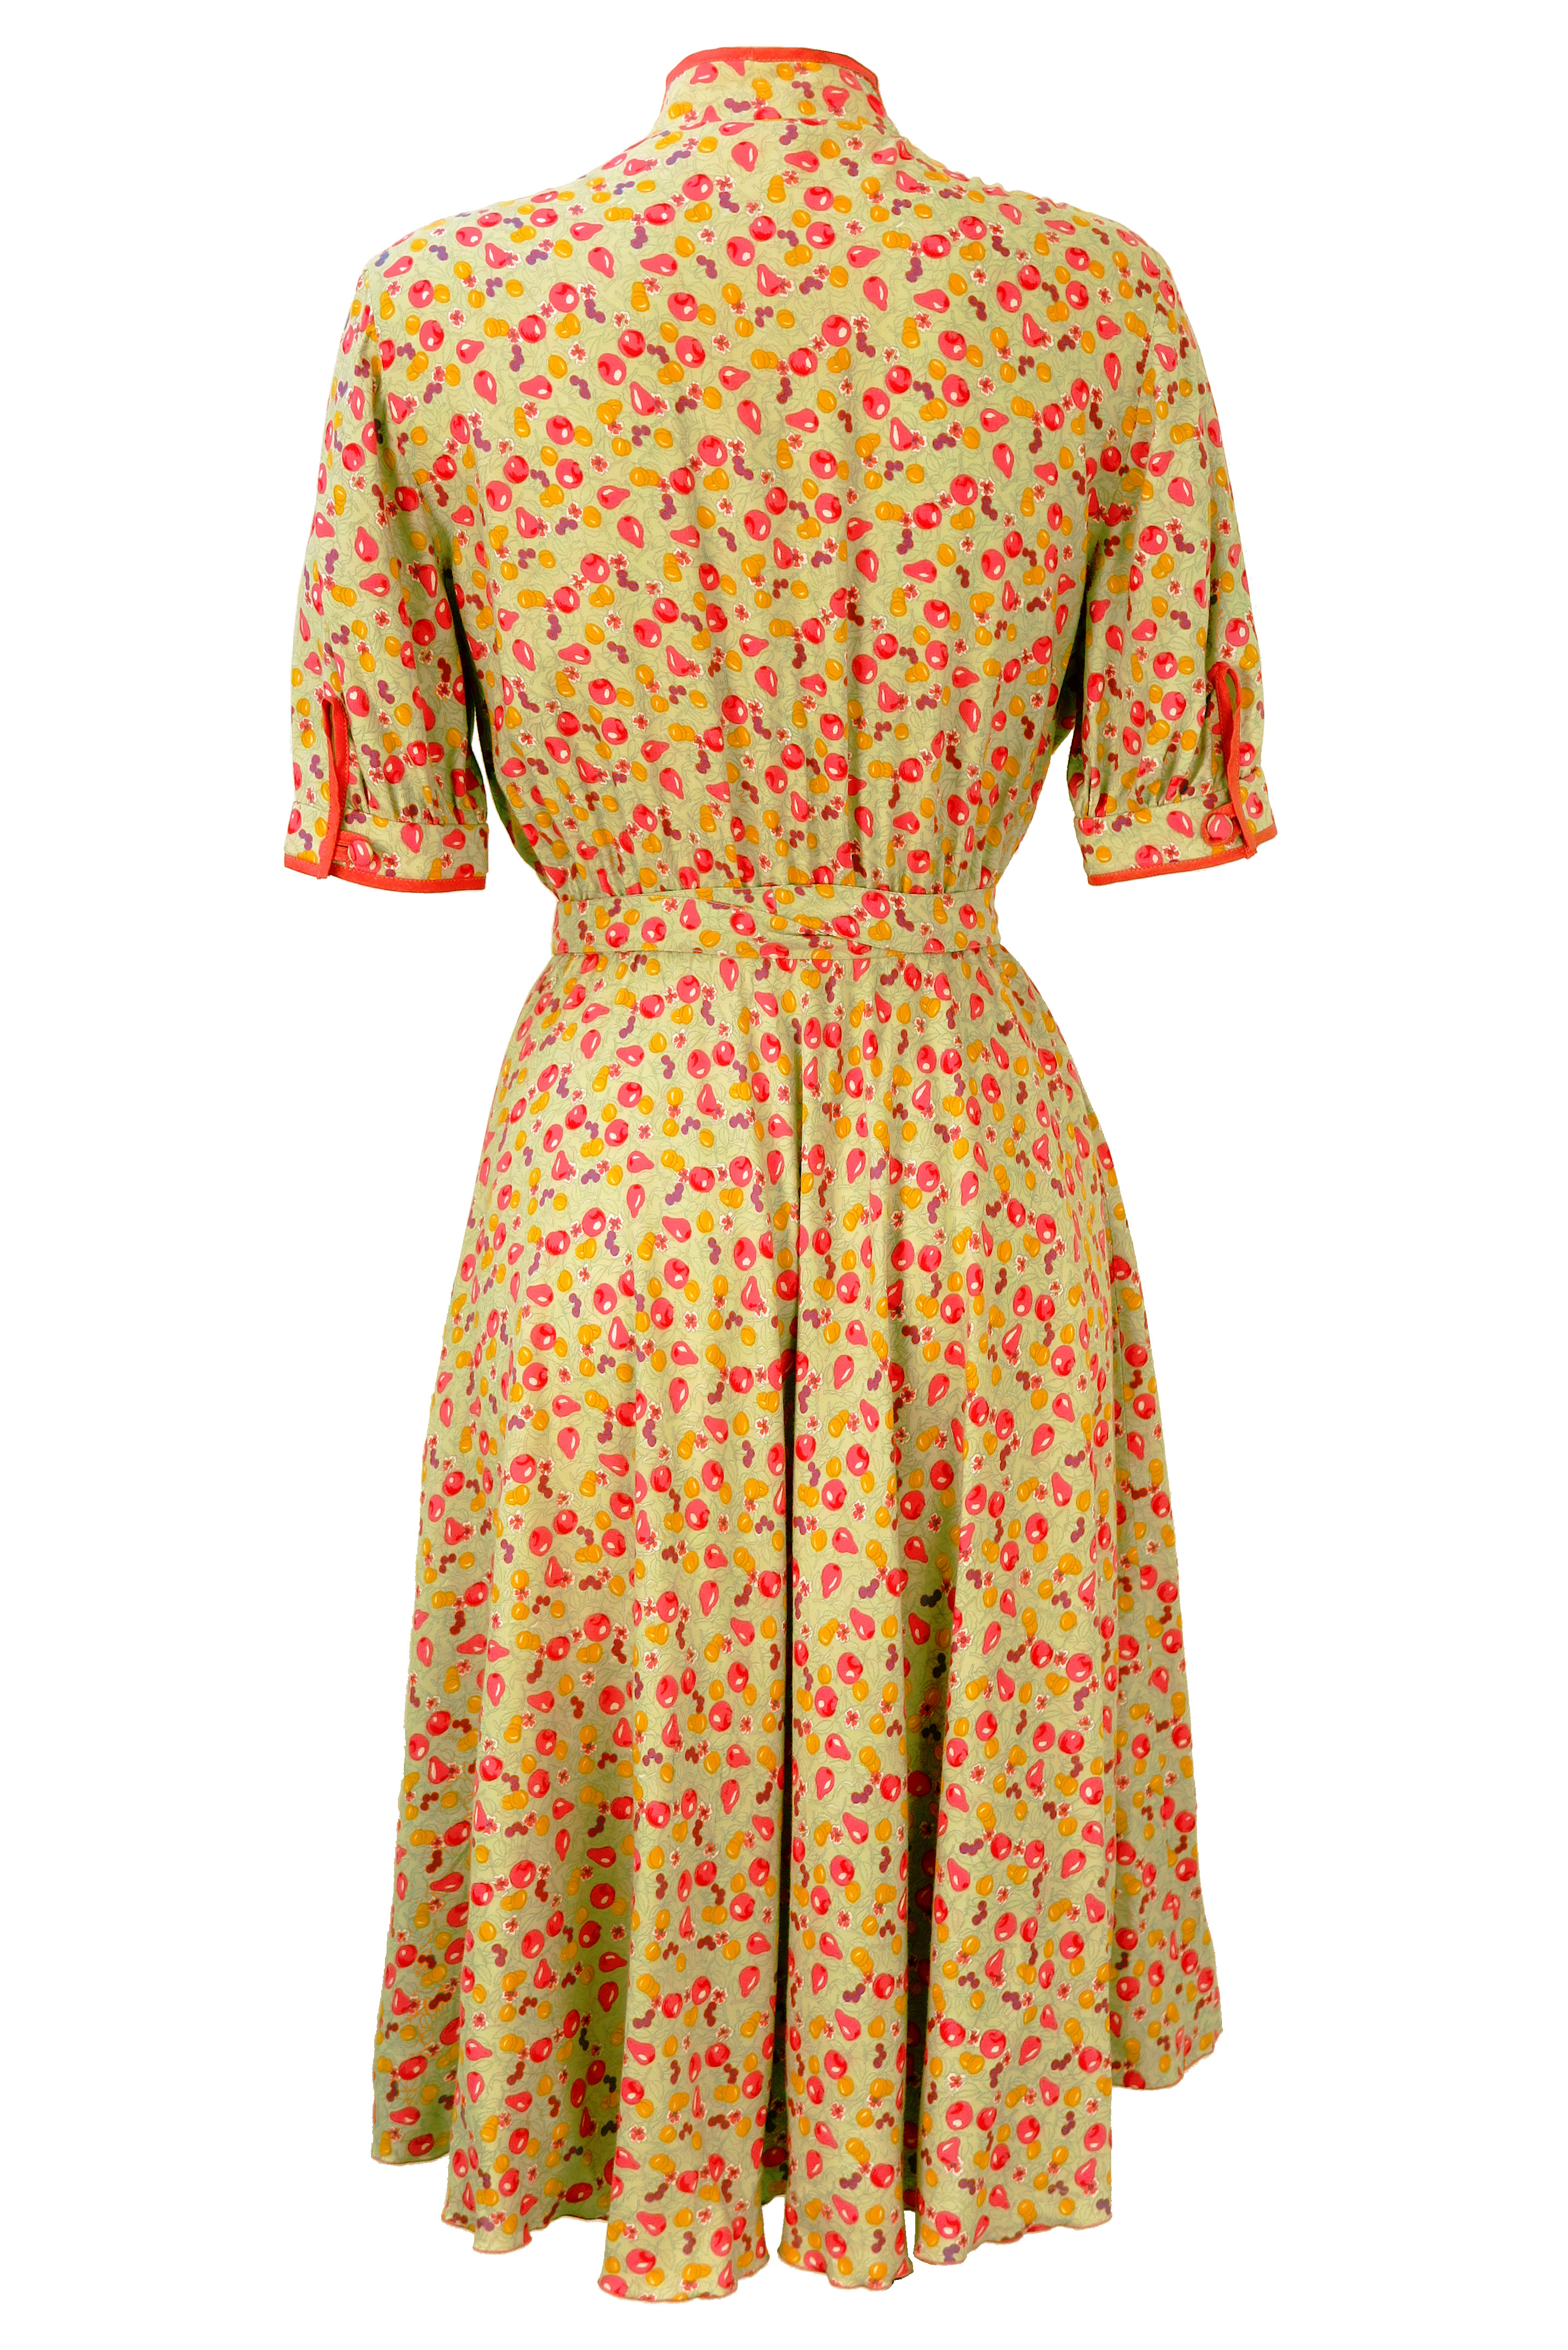 1940’s Style Tea Dress with Pink, Purple & Yellow Fruit Pattern – S/M ...